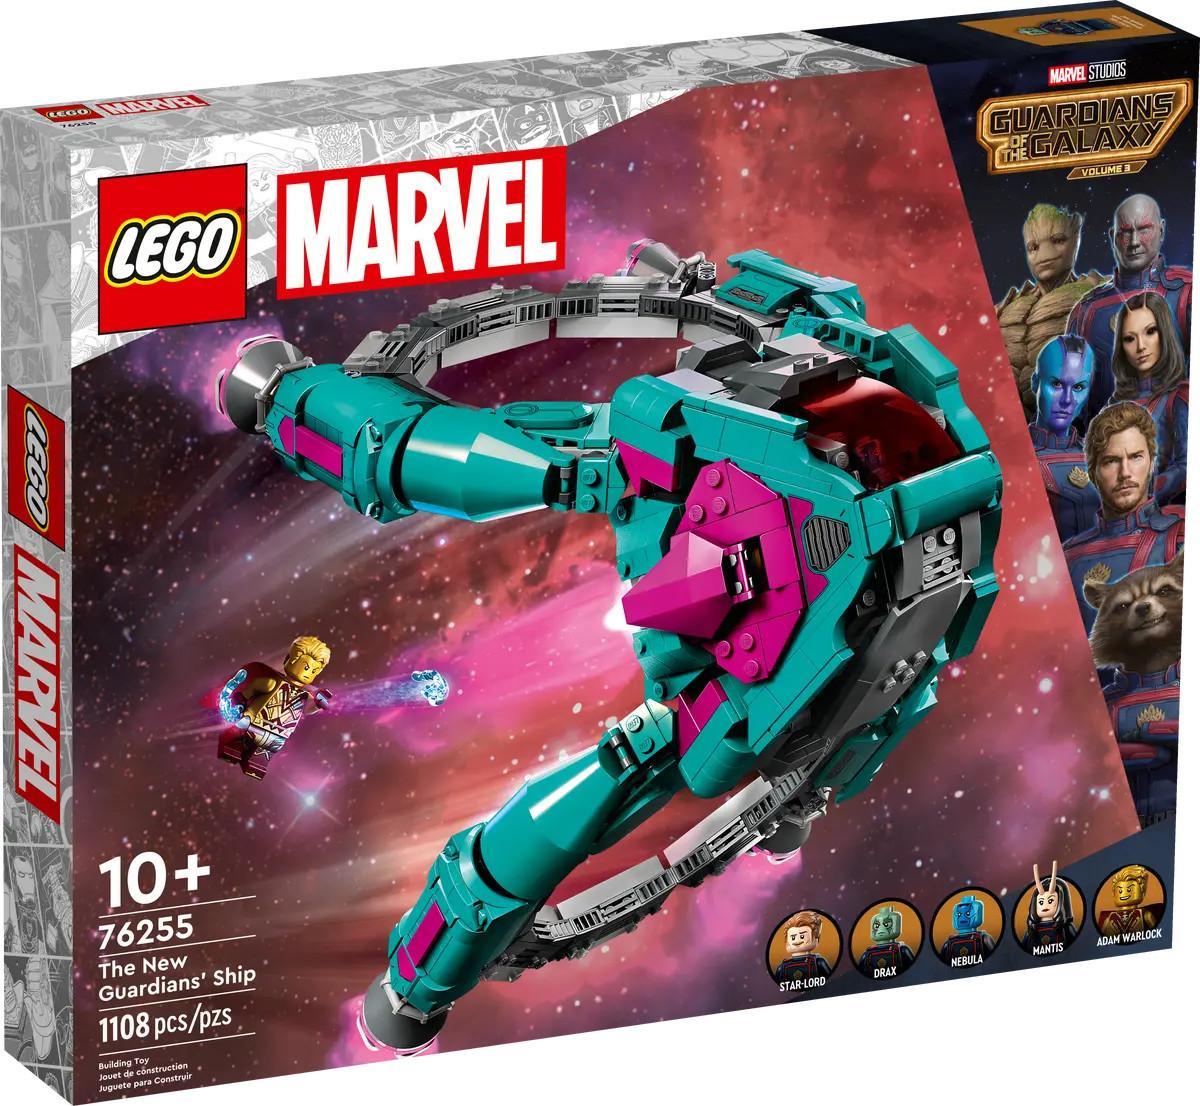 Lego Marvel Superheroes - The New Guardians Ship